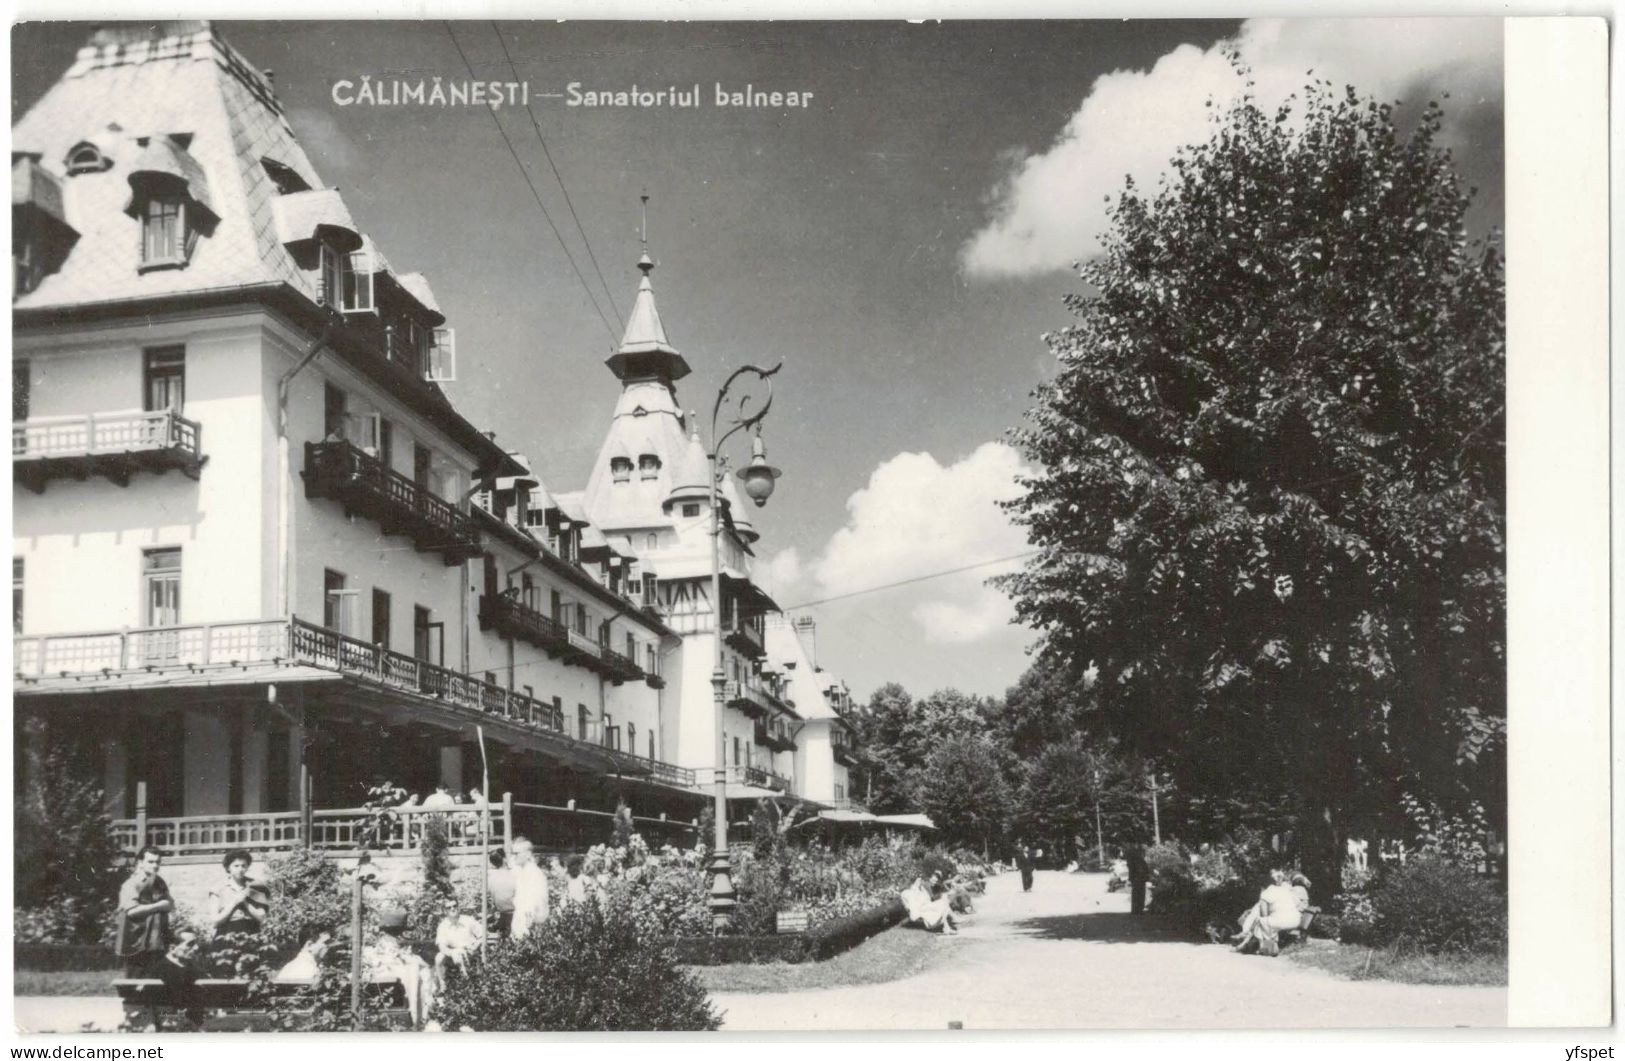 Călimănești Health Resort - Sanatorium - Rumänien